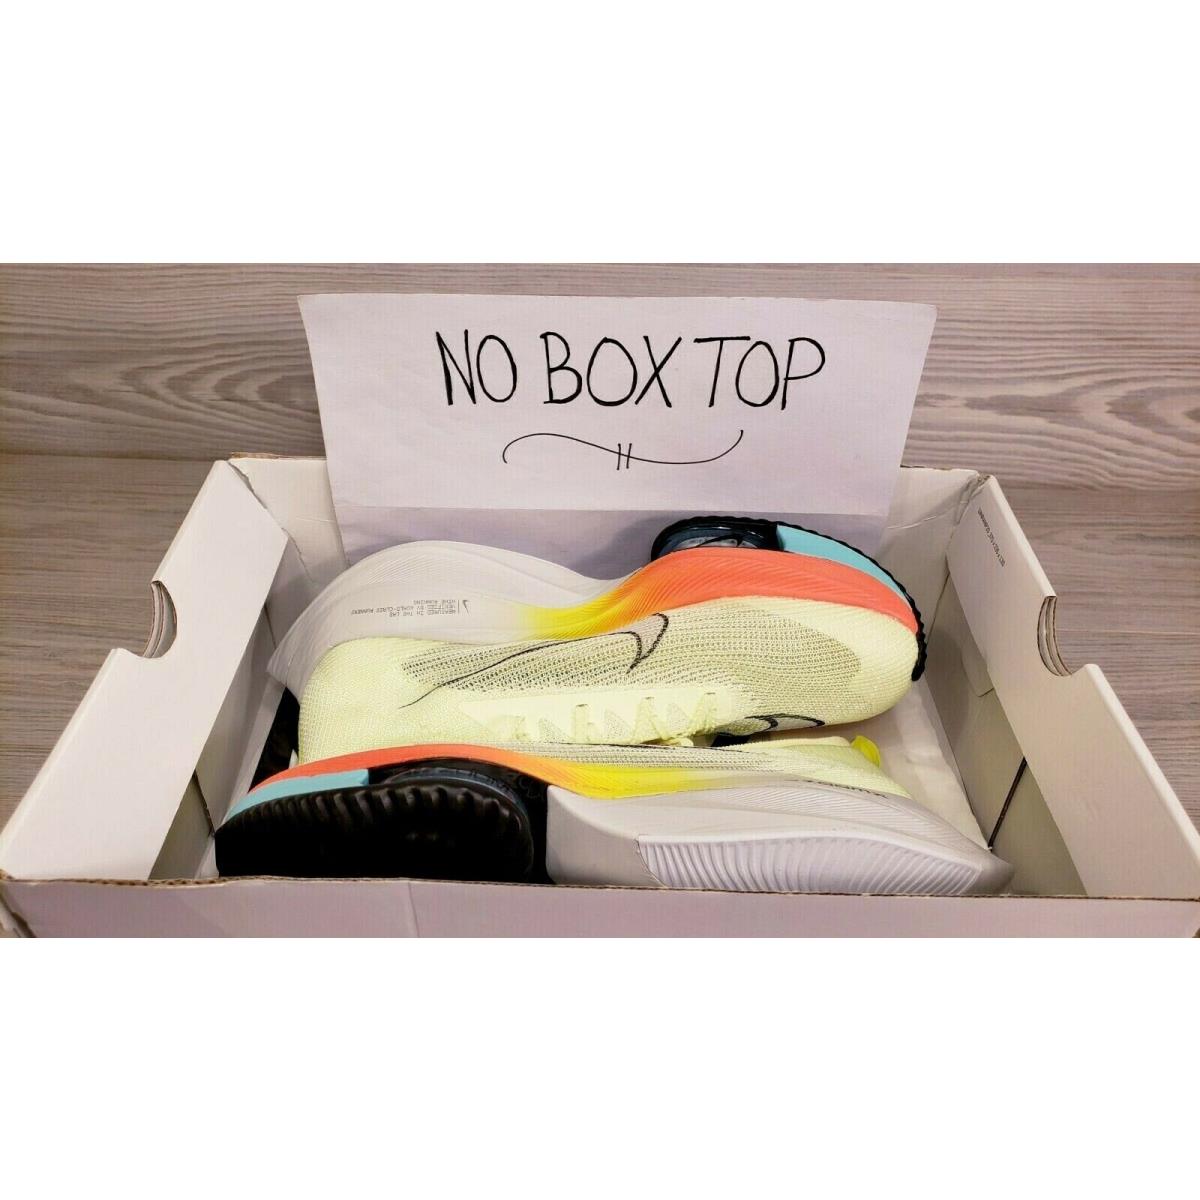 Nike shoes  - Multicolor 4